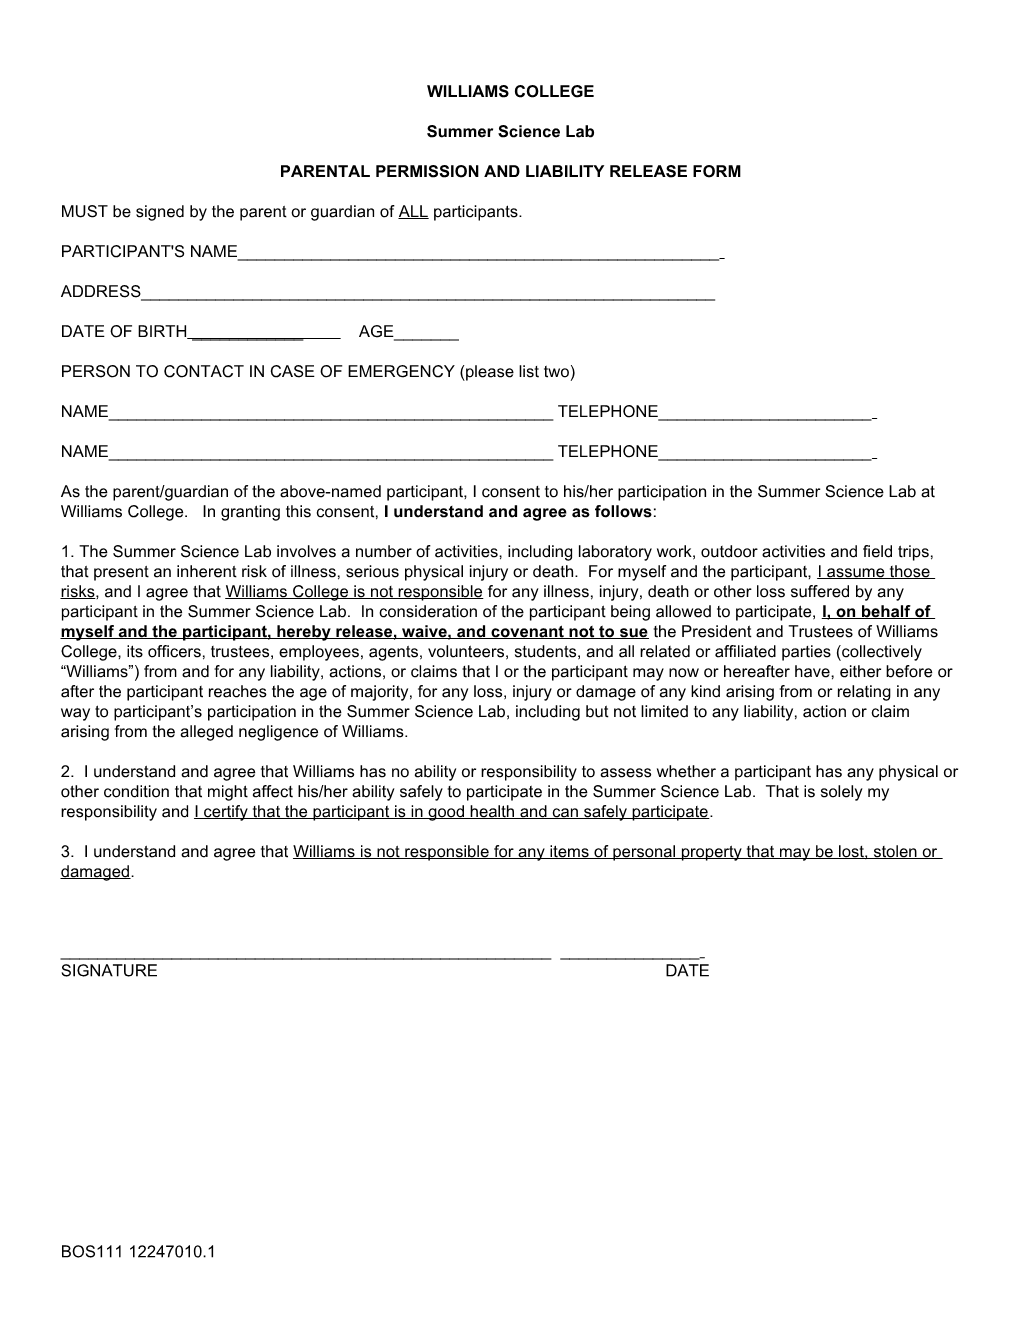 Parental Permission and Liability Release Form